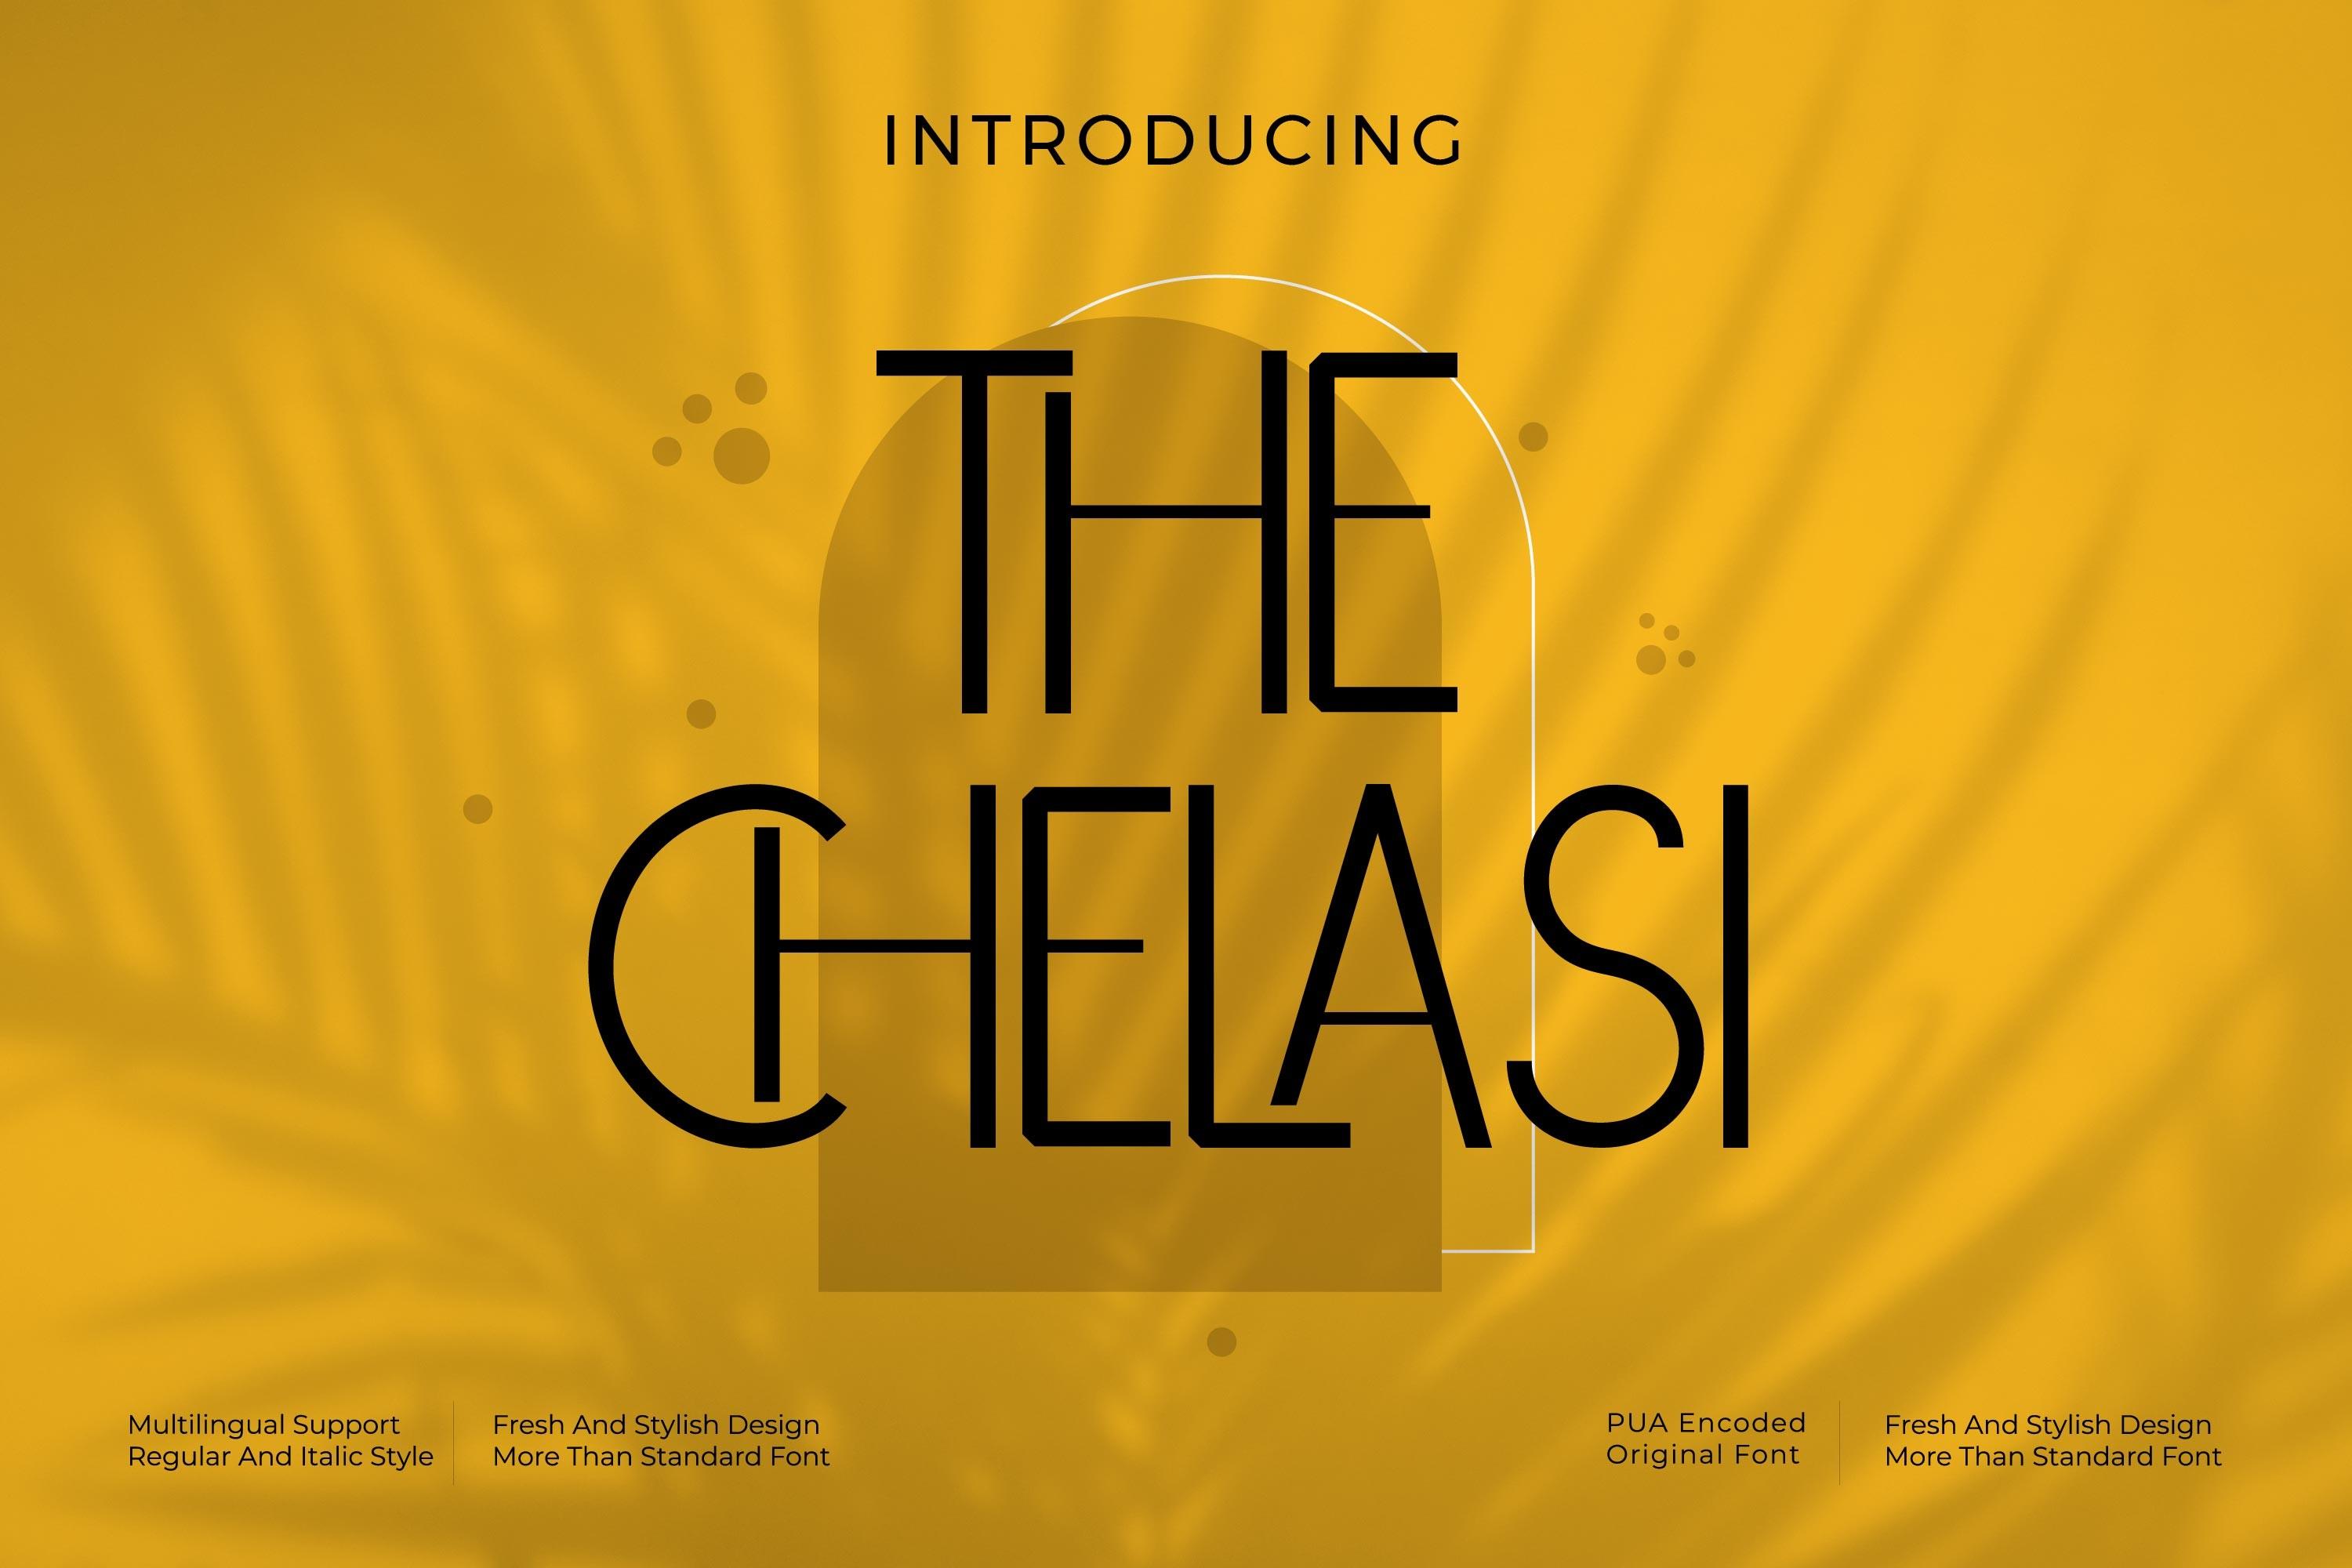 The Chelasi Font